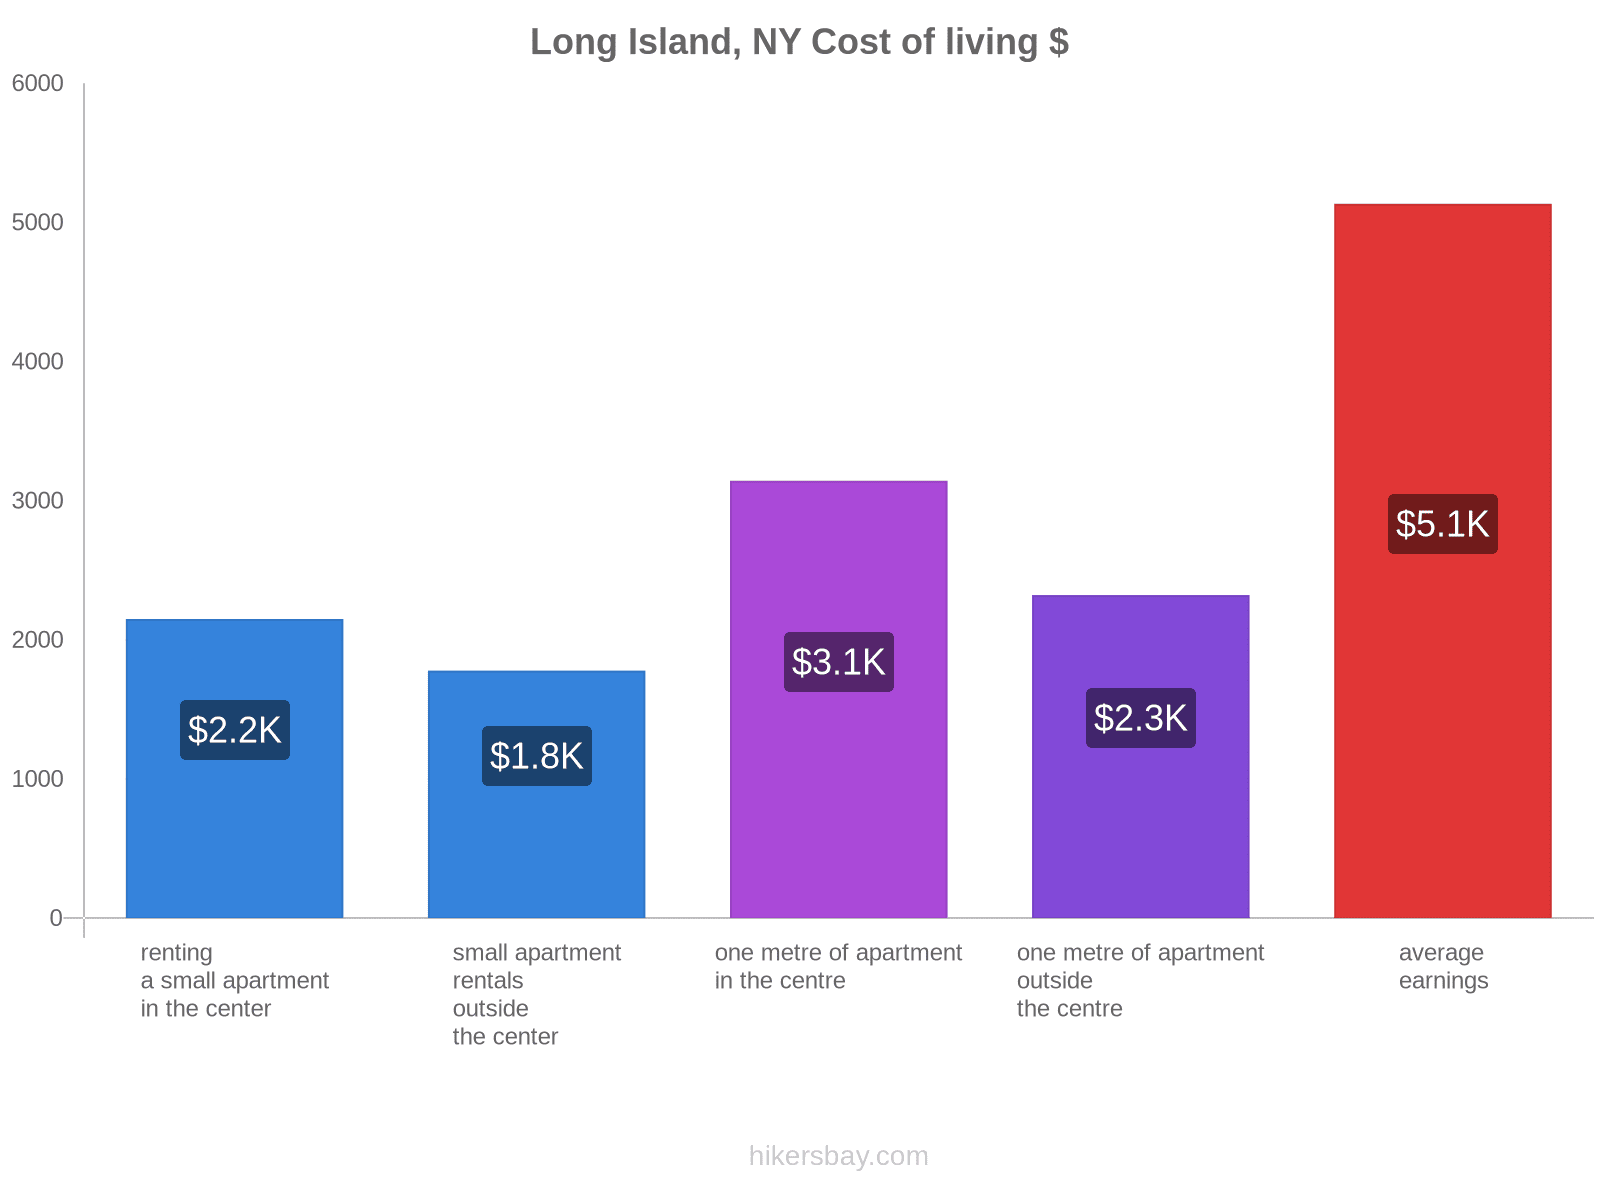 Long Island, NY cost of living hikersbay.com